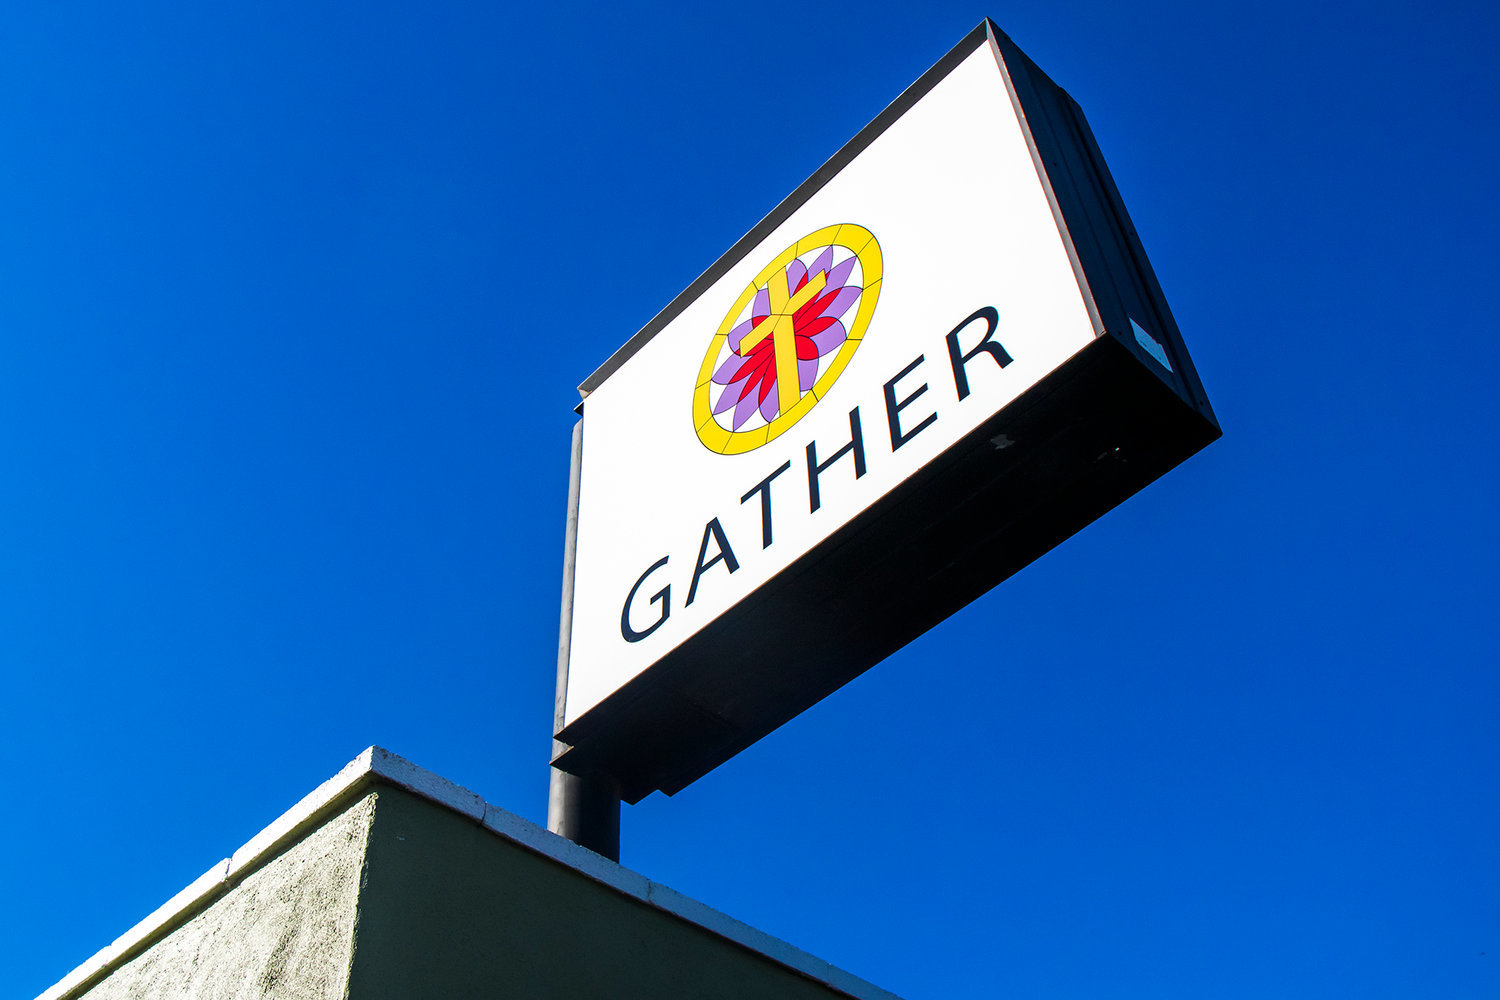 The Gather Church